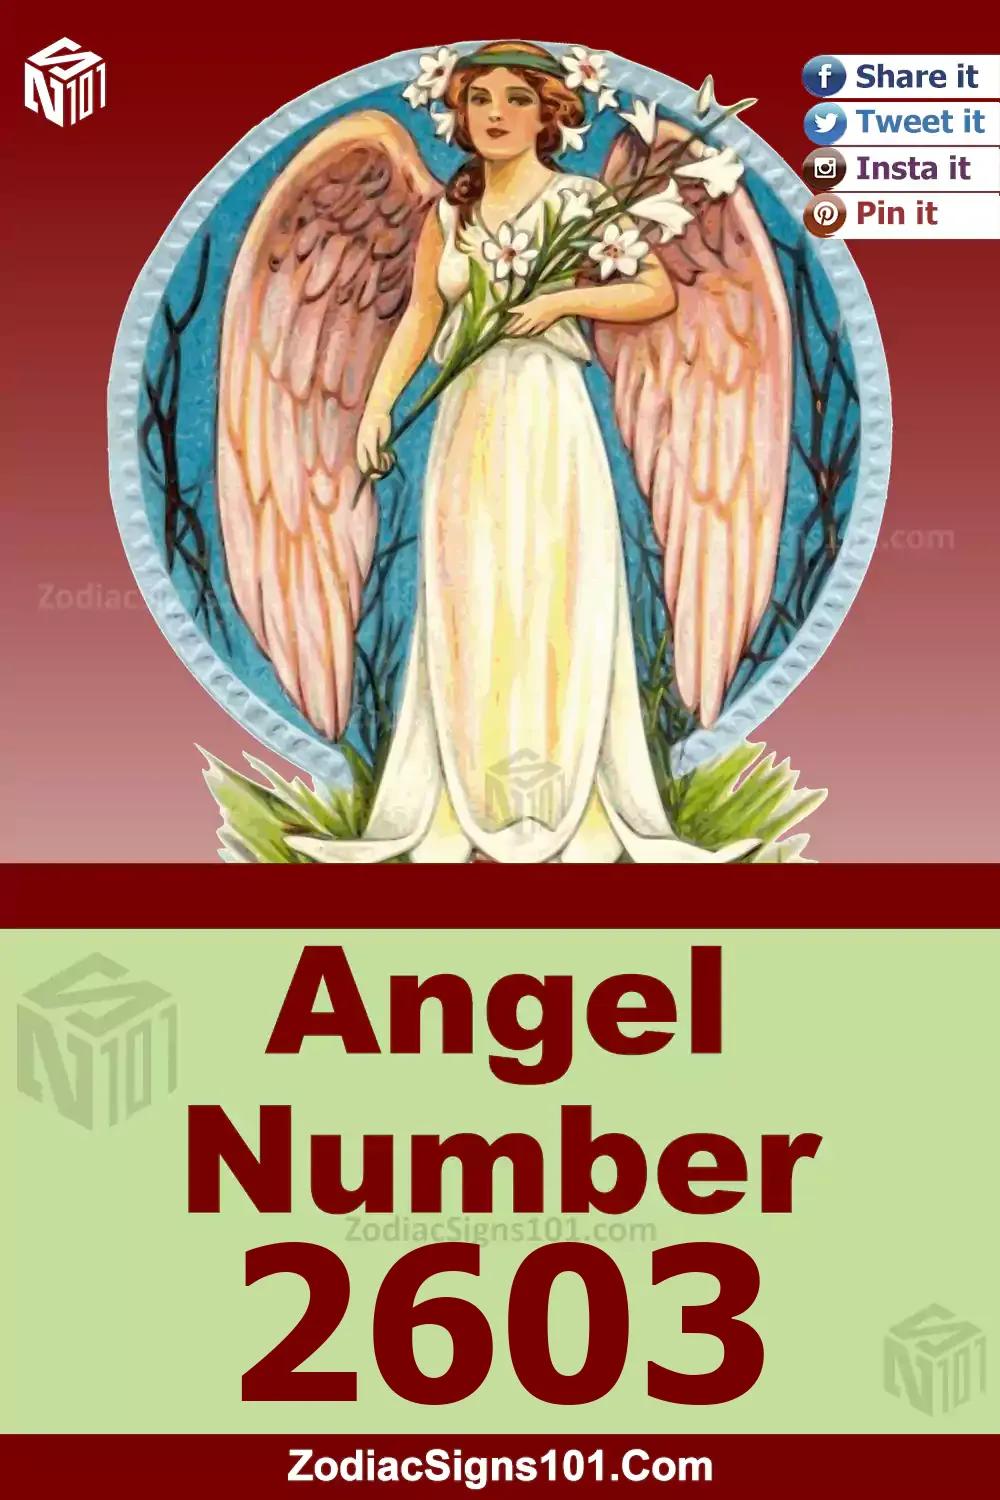 2603-Angel-Number-Meaning.jpg